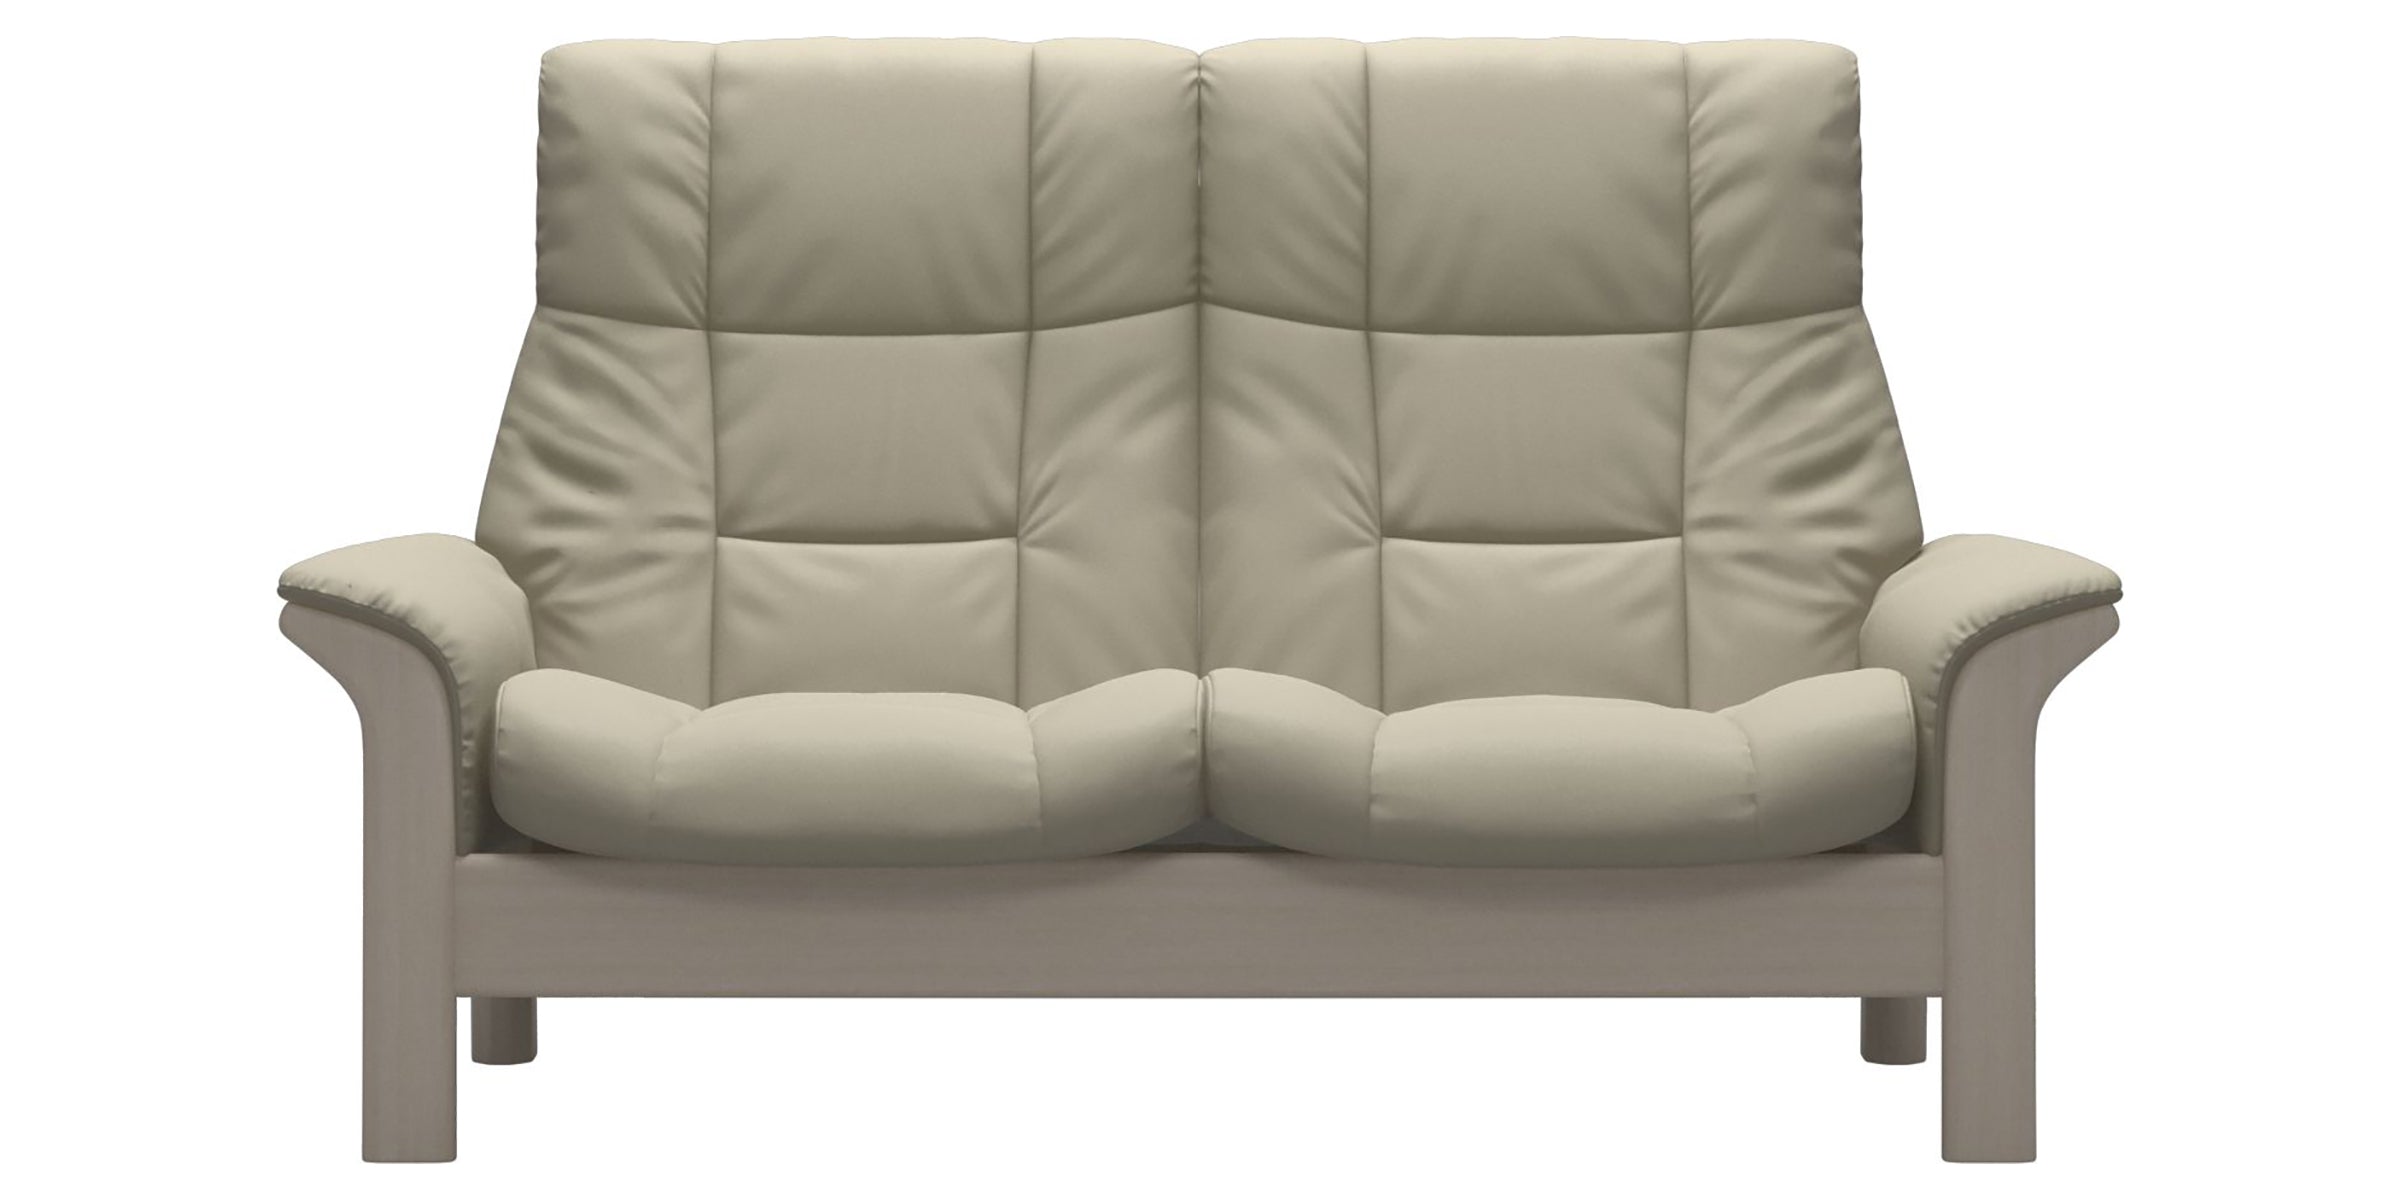 Paloma Leather Light Grey and Whitewash Base | Stressless Buckingham 2-Seater High Back Sofa | Valley Ridge Furniture